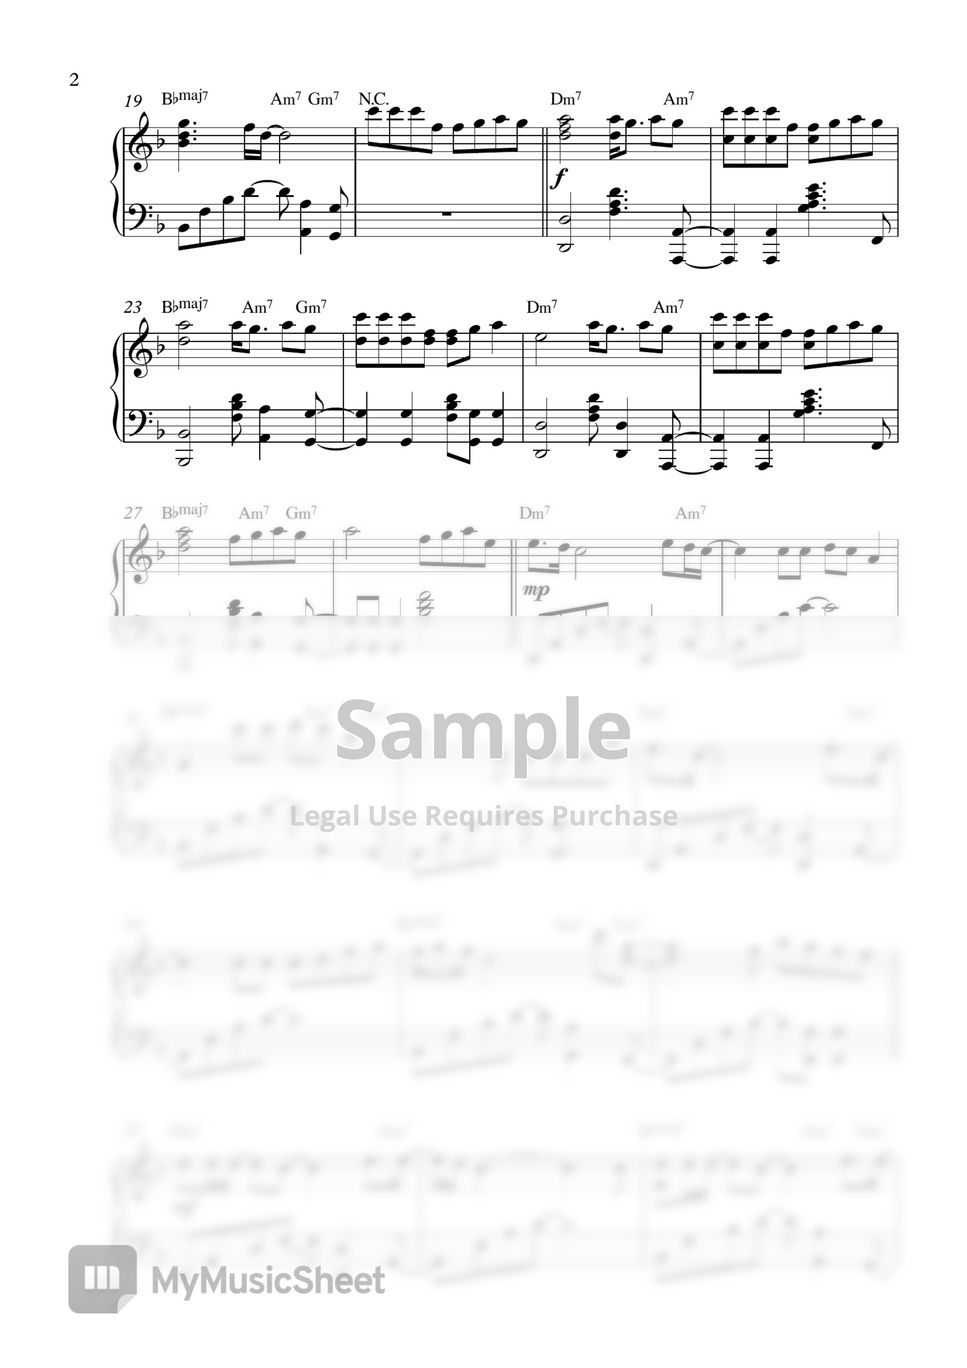 Ariana Grande - positions (Piano Sheet) by Pianella Piano